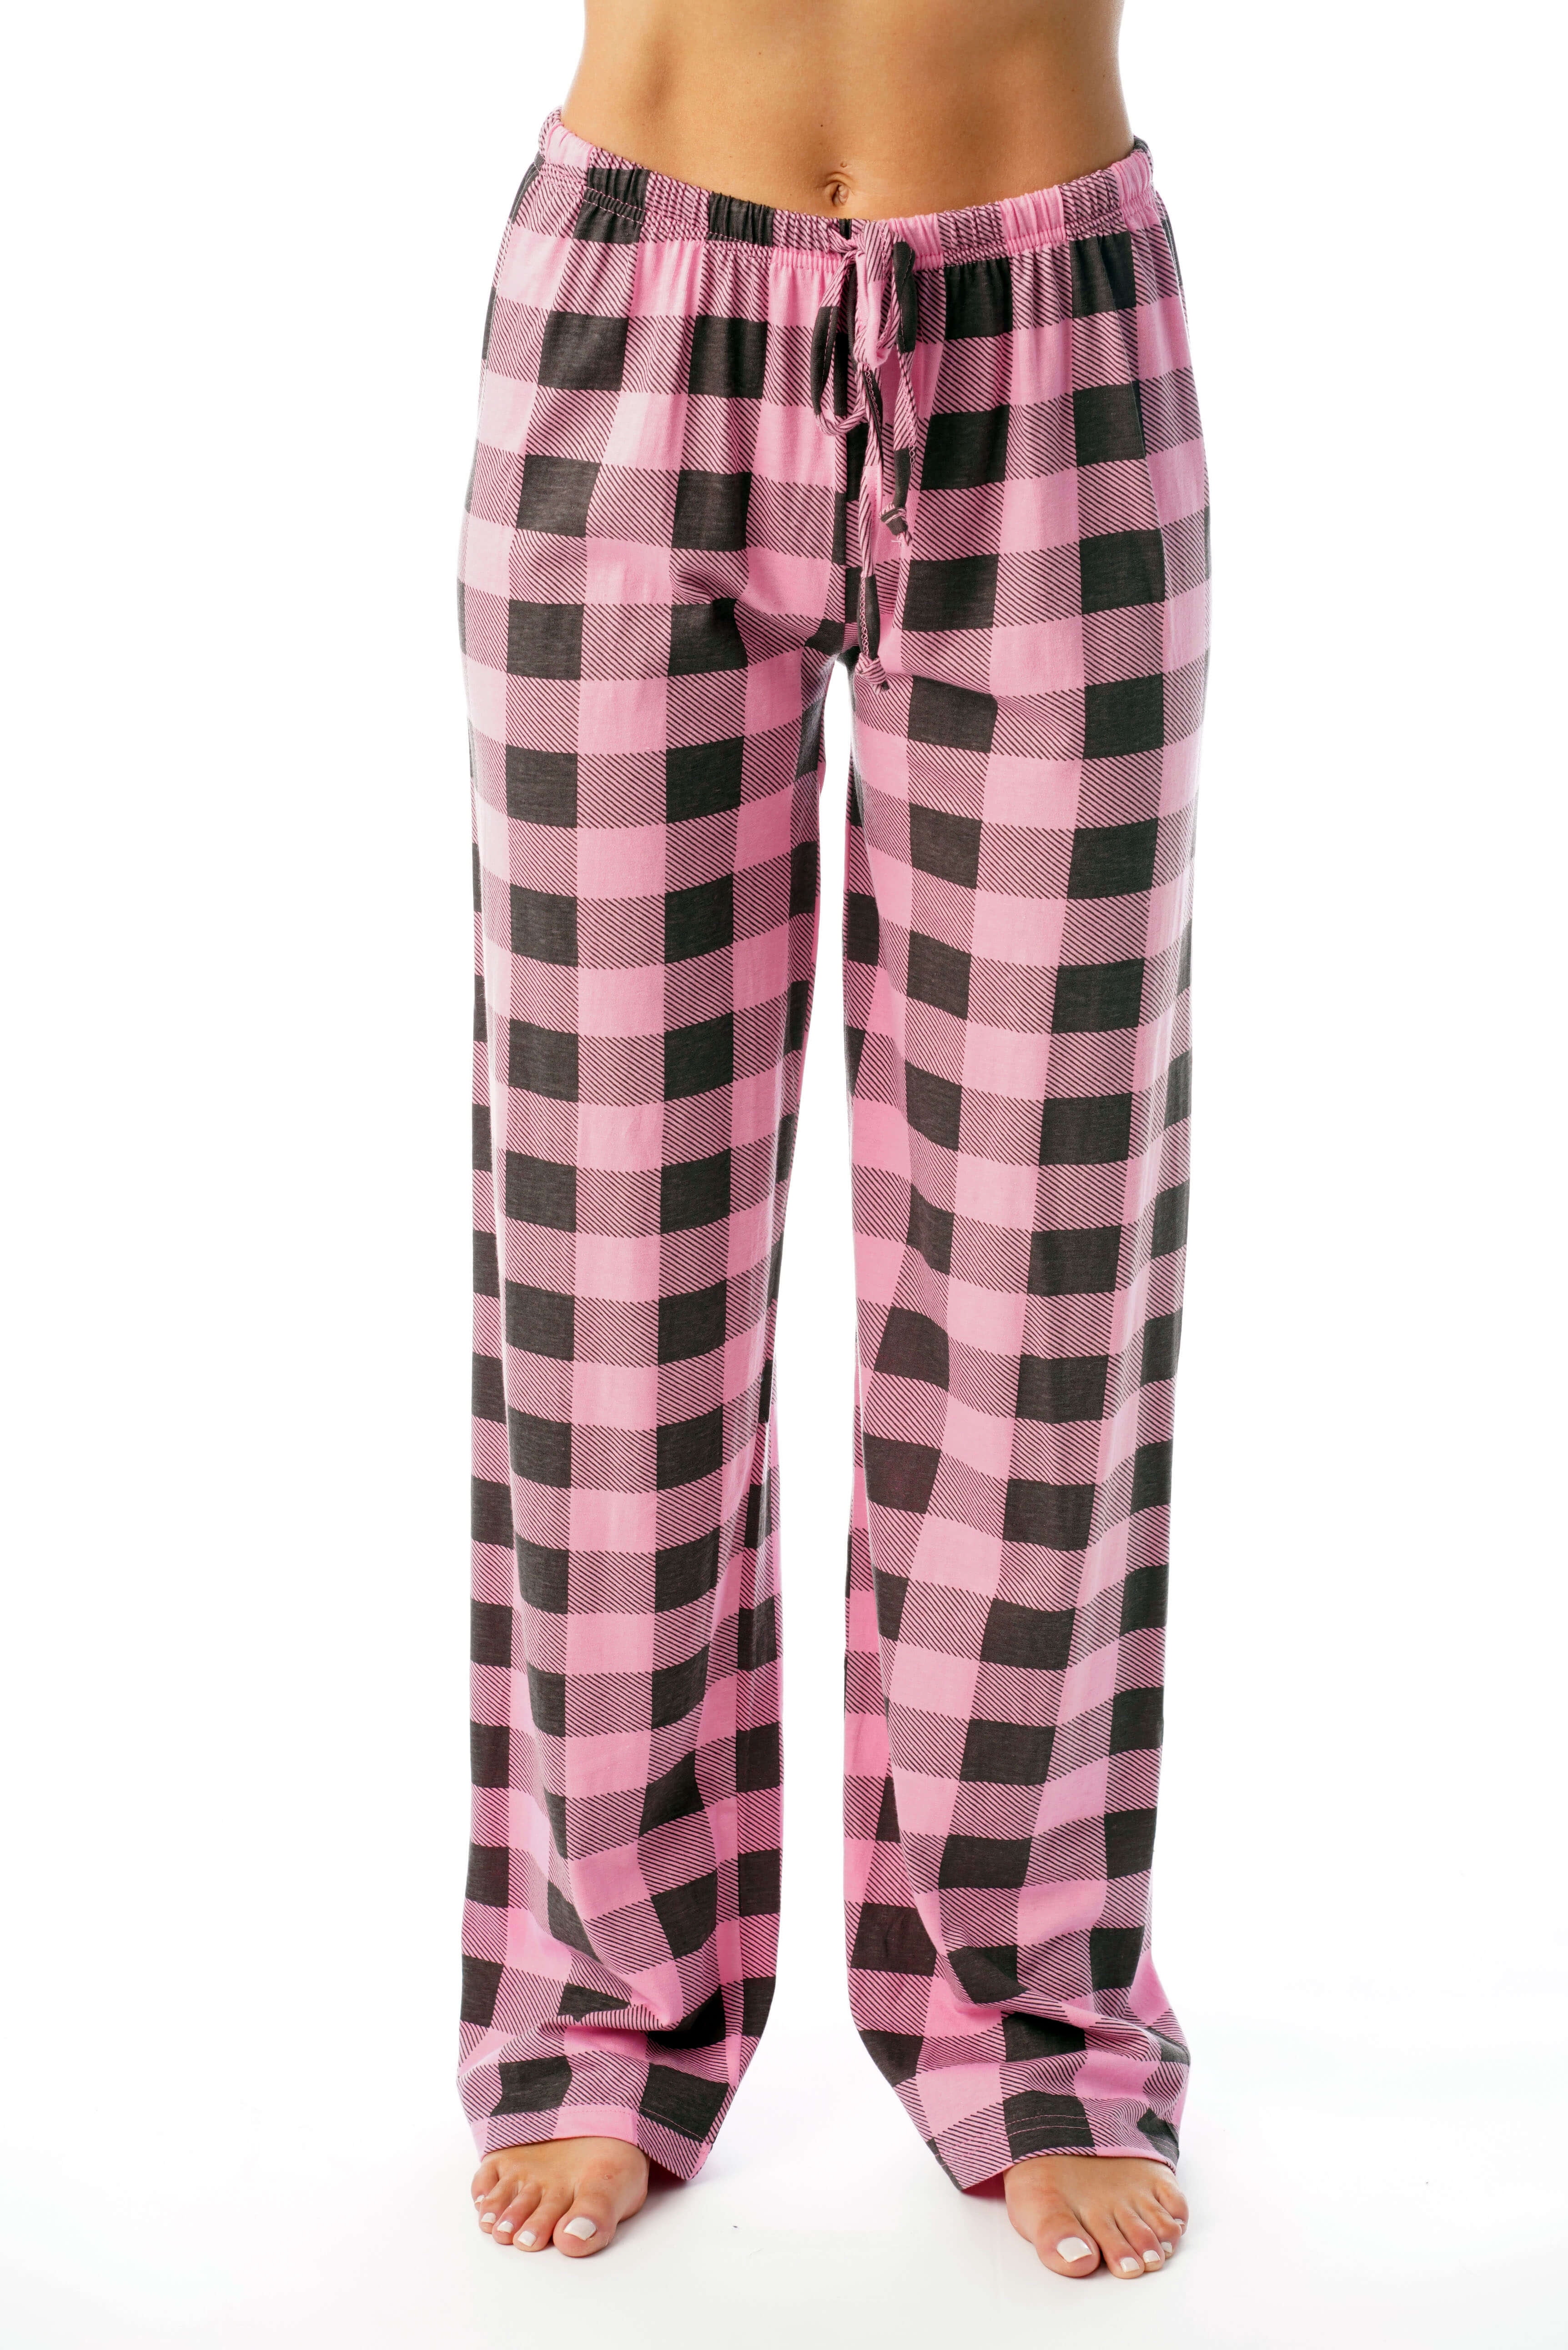 KISSGAL Women's Plaid Pajama Pants Christmas Drawstring Lounge Sleep Pants  Soft PJ Bottoms with Pockets S-XXL 